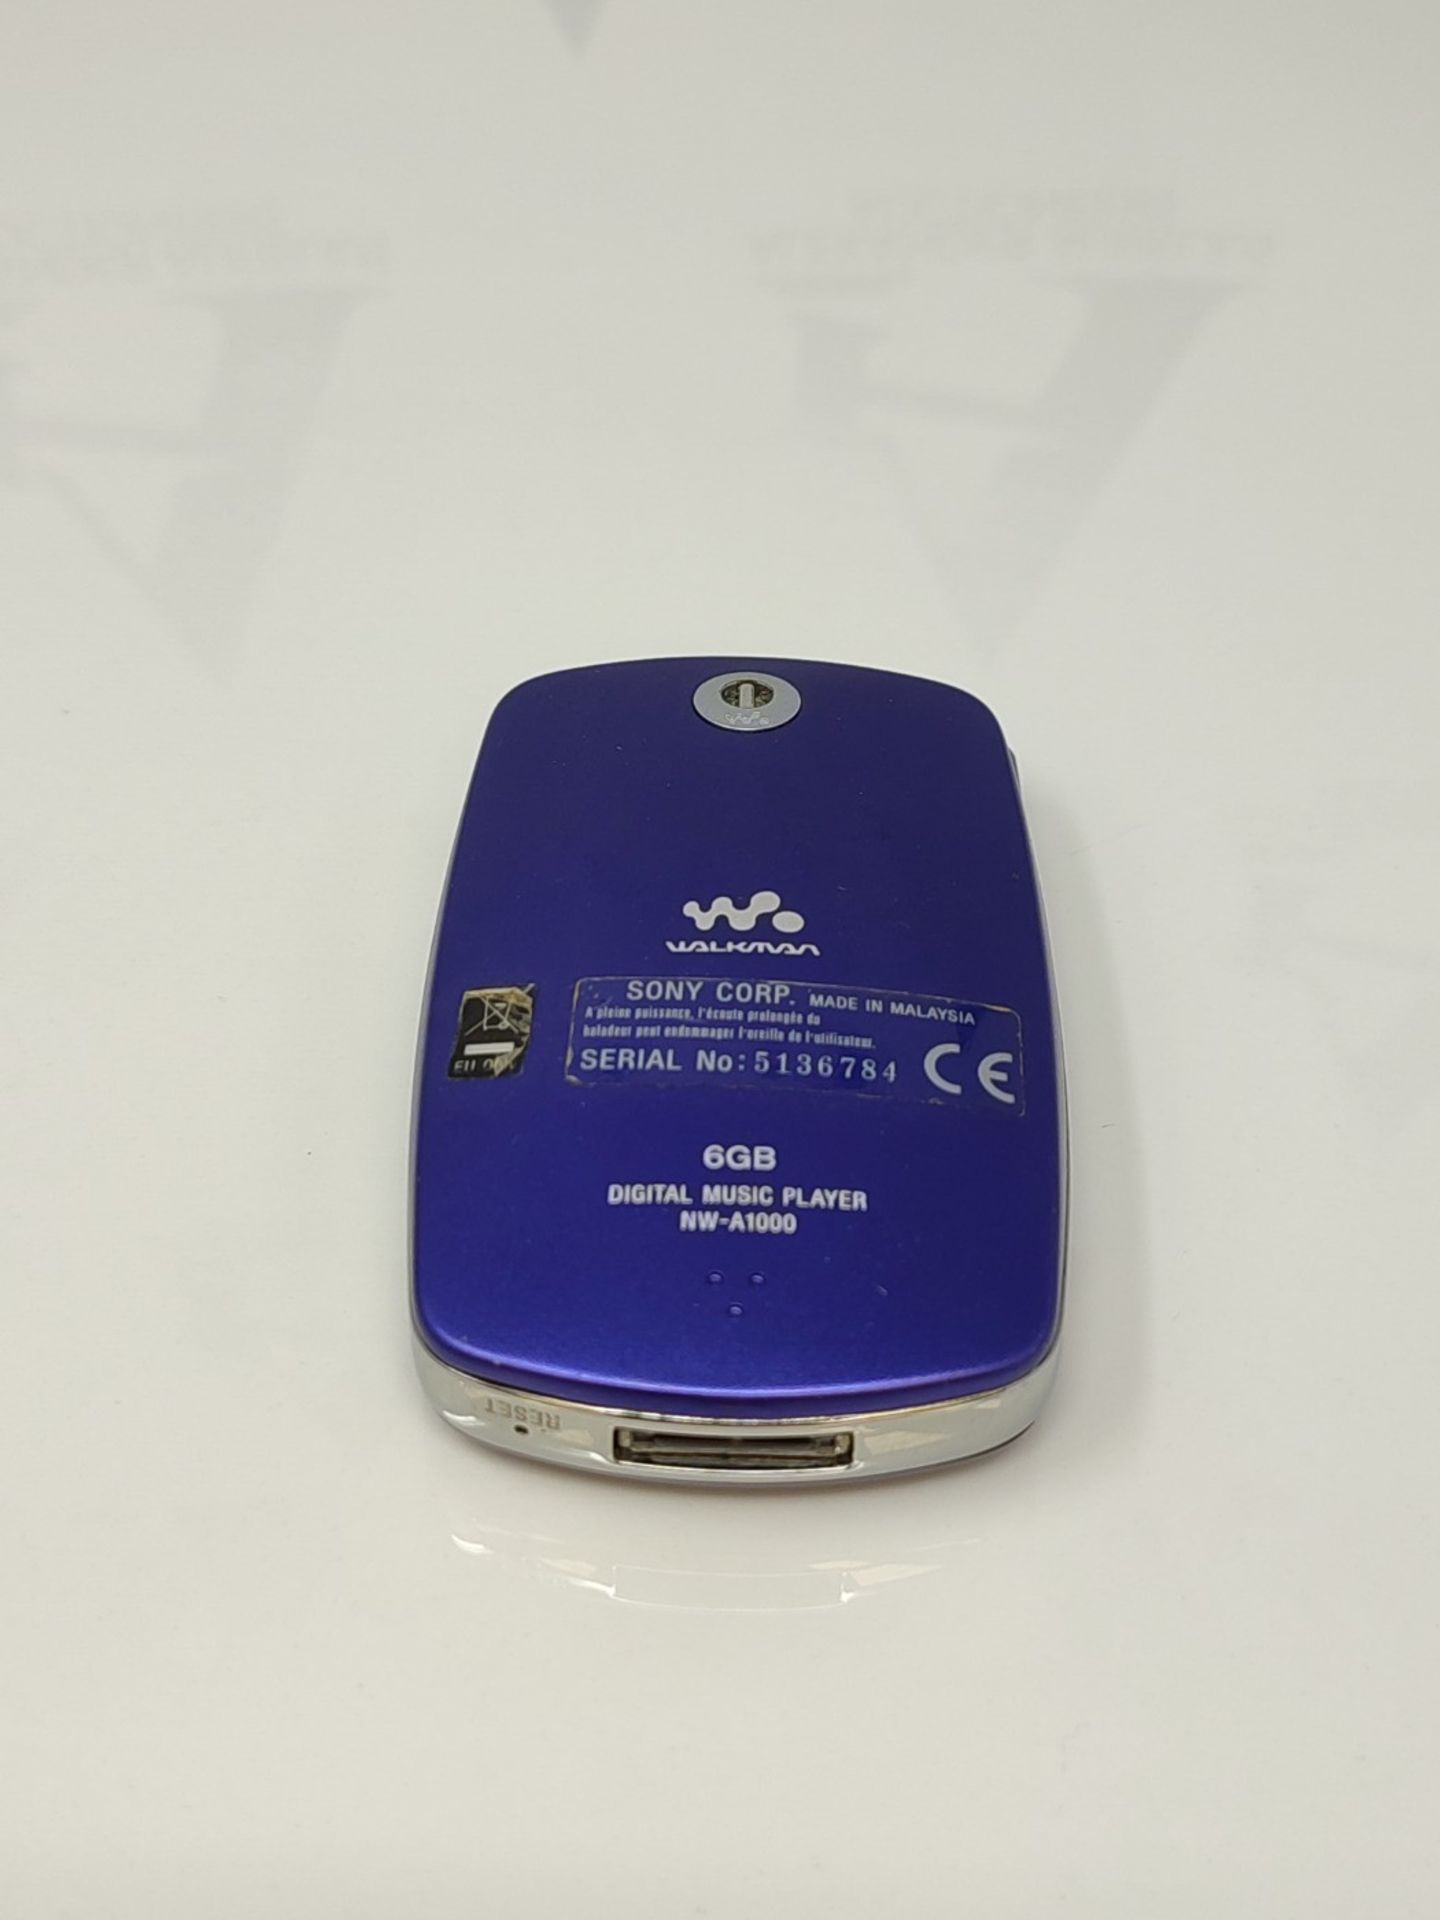 Sony Walkman NW-A1000 (6GB) Digital Media Player - Image 3 of 3